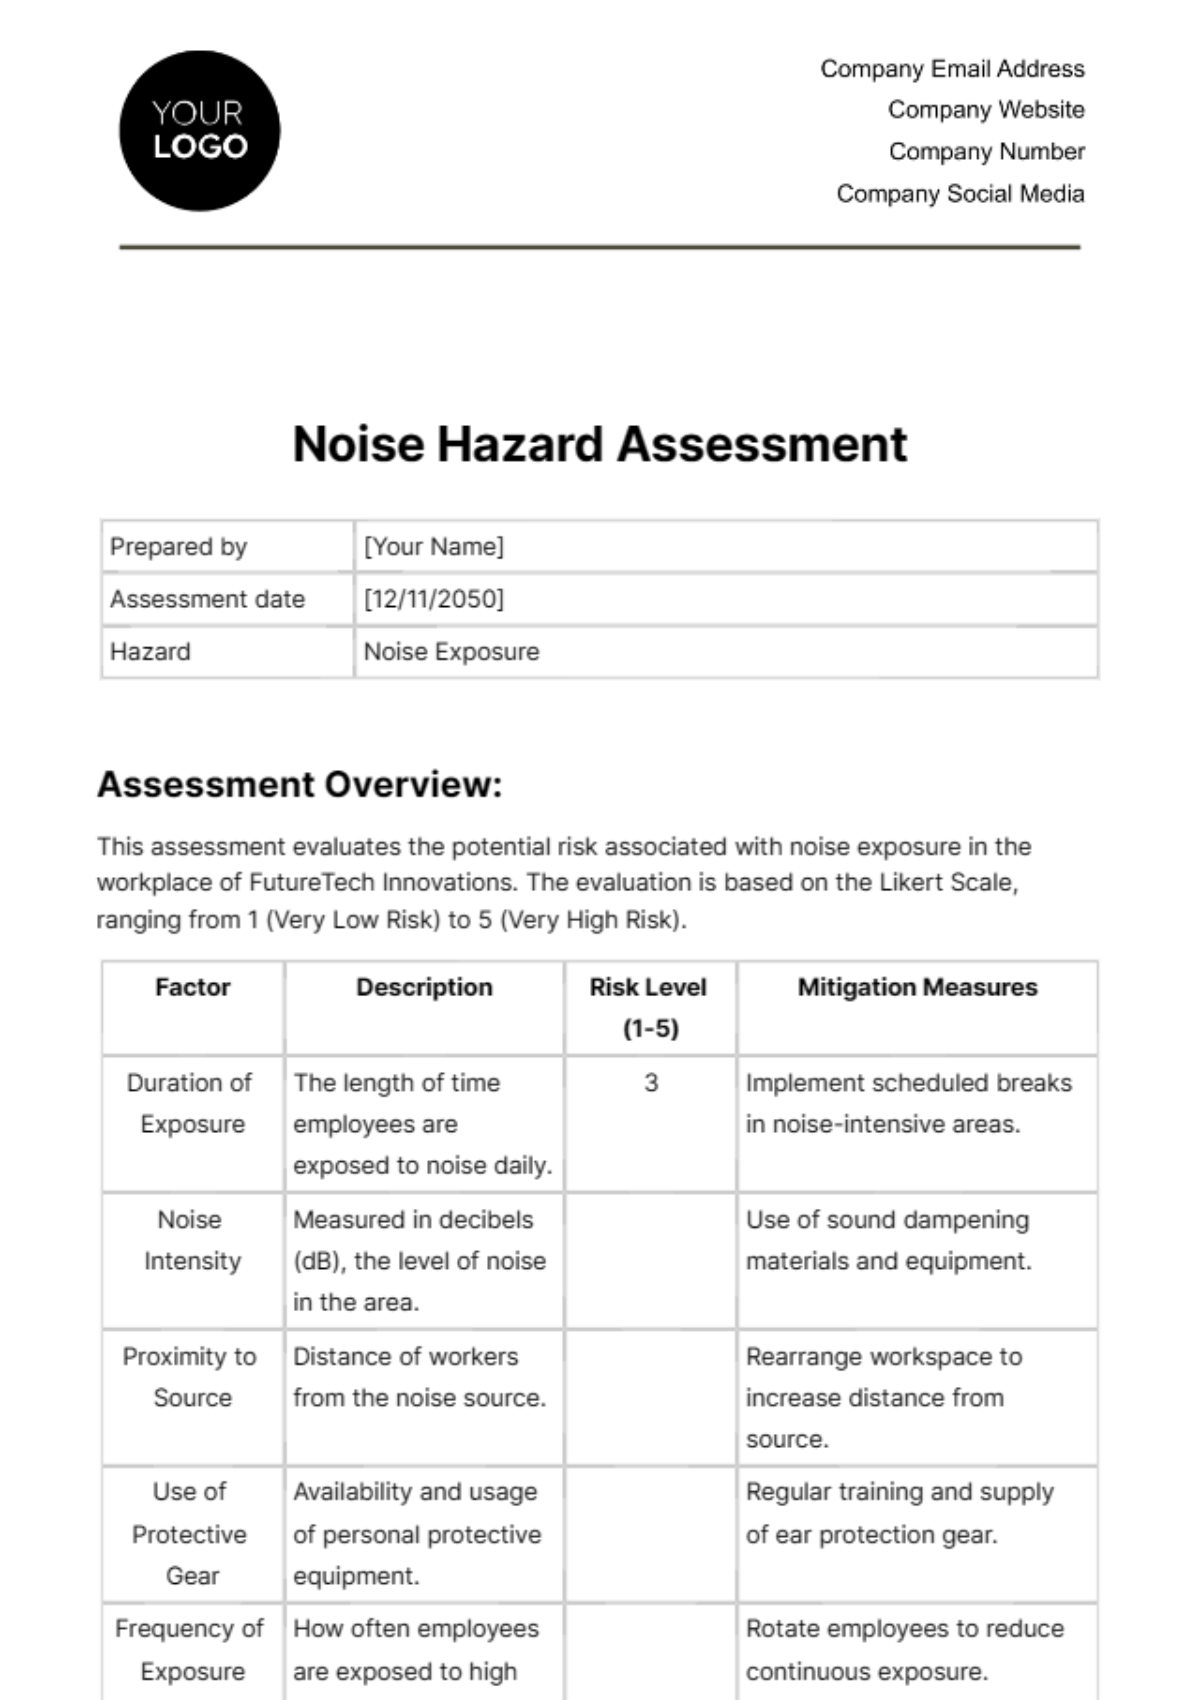 Noise Hazard Assessment Template